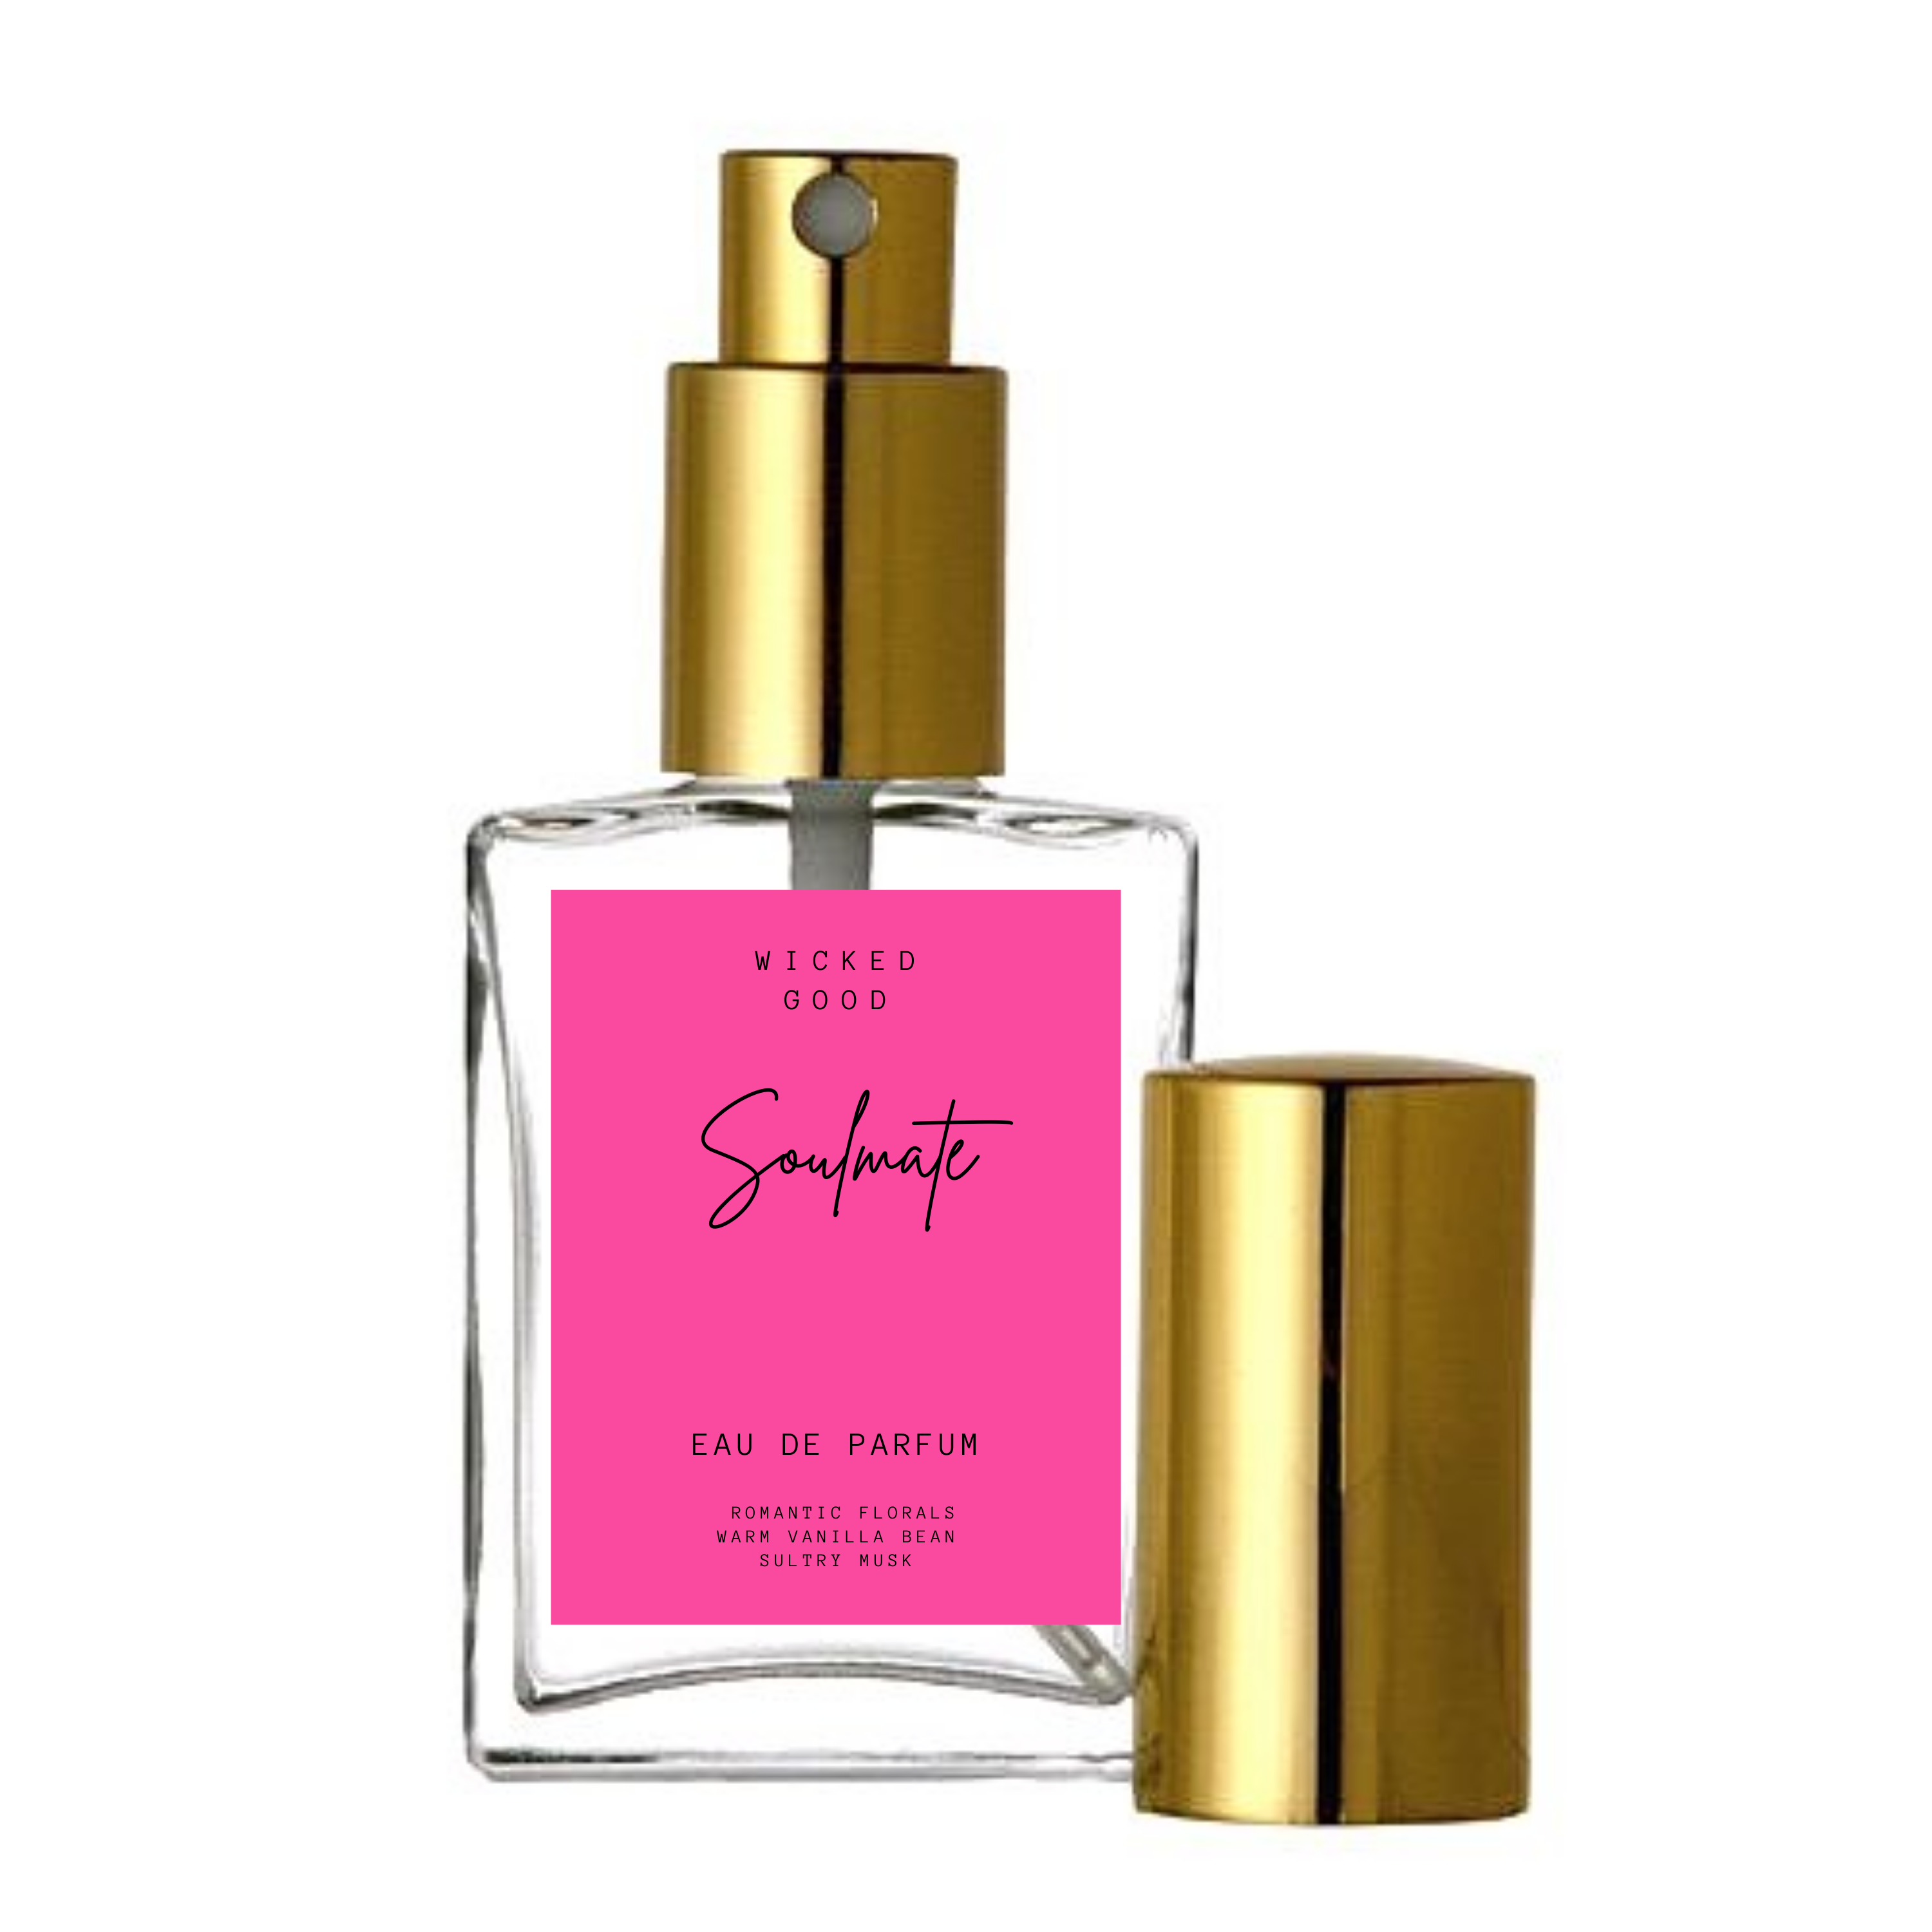 Victoria Secret WICKED Eau De Parfum EDP Perfume Fragrance Spray 3.4 oz /  100 ml